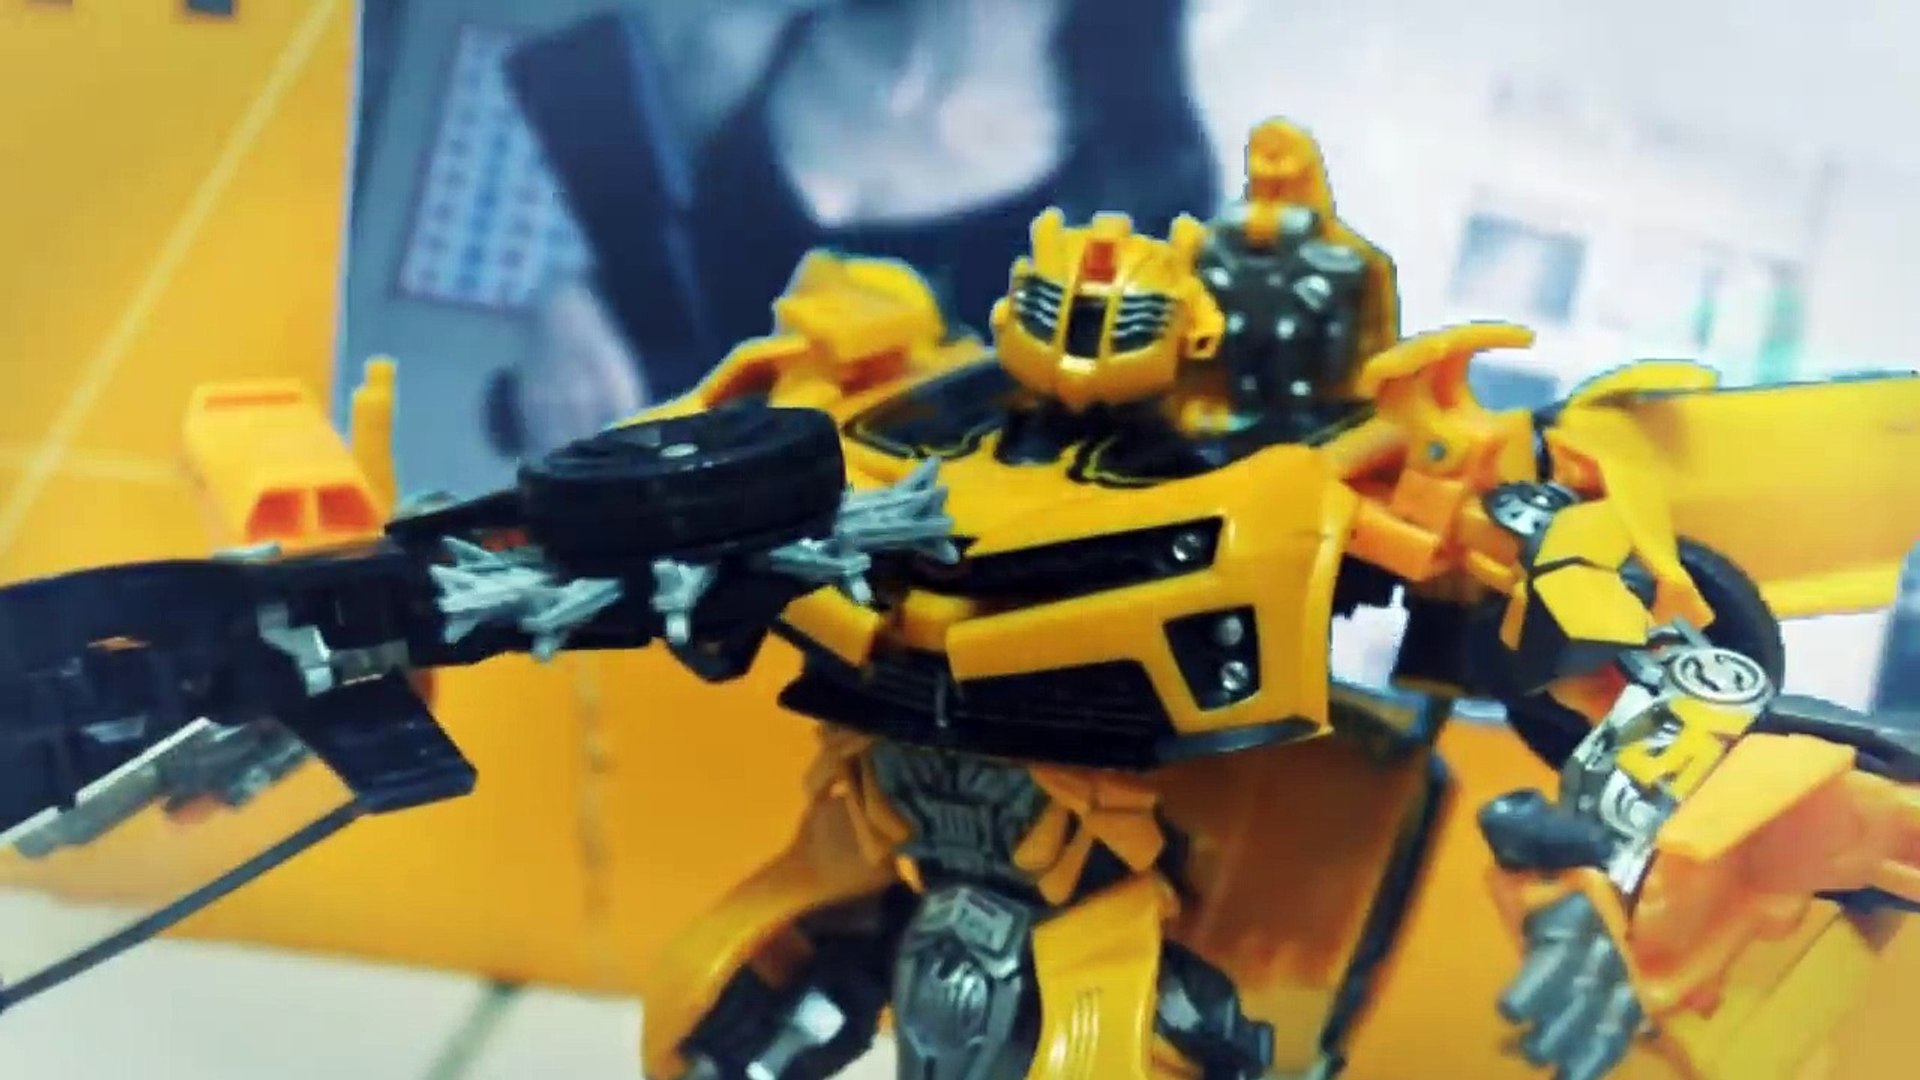 Transformers Stop Motion - Bumble Bee VS Barricade 競速與毀滅 Can Bumblebee defeat Optimus Prim